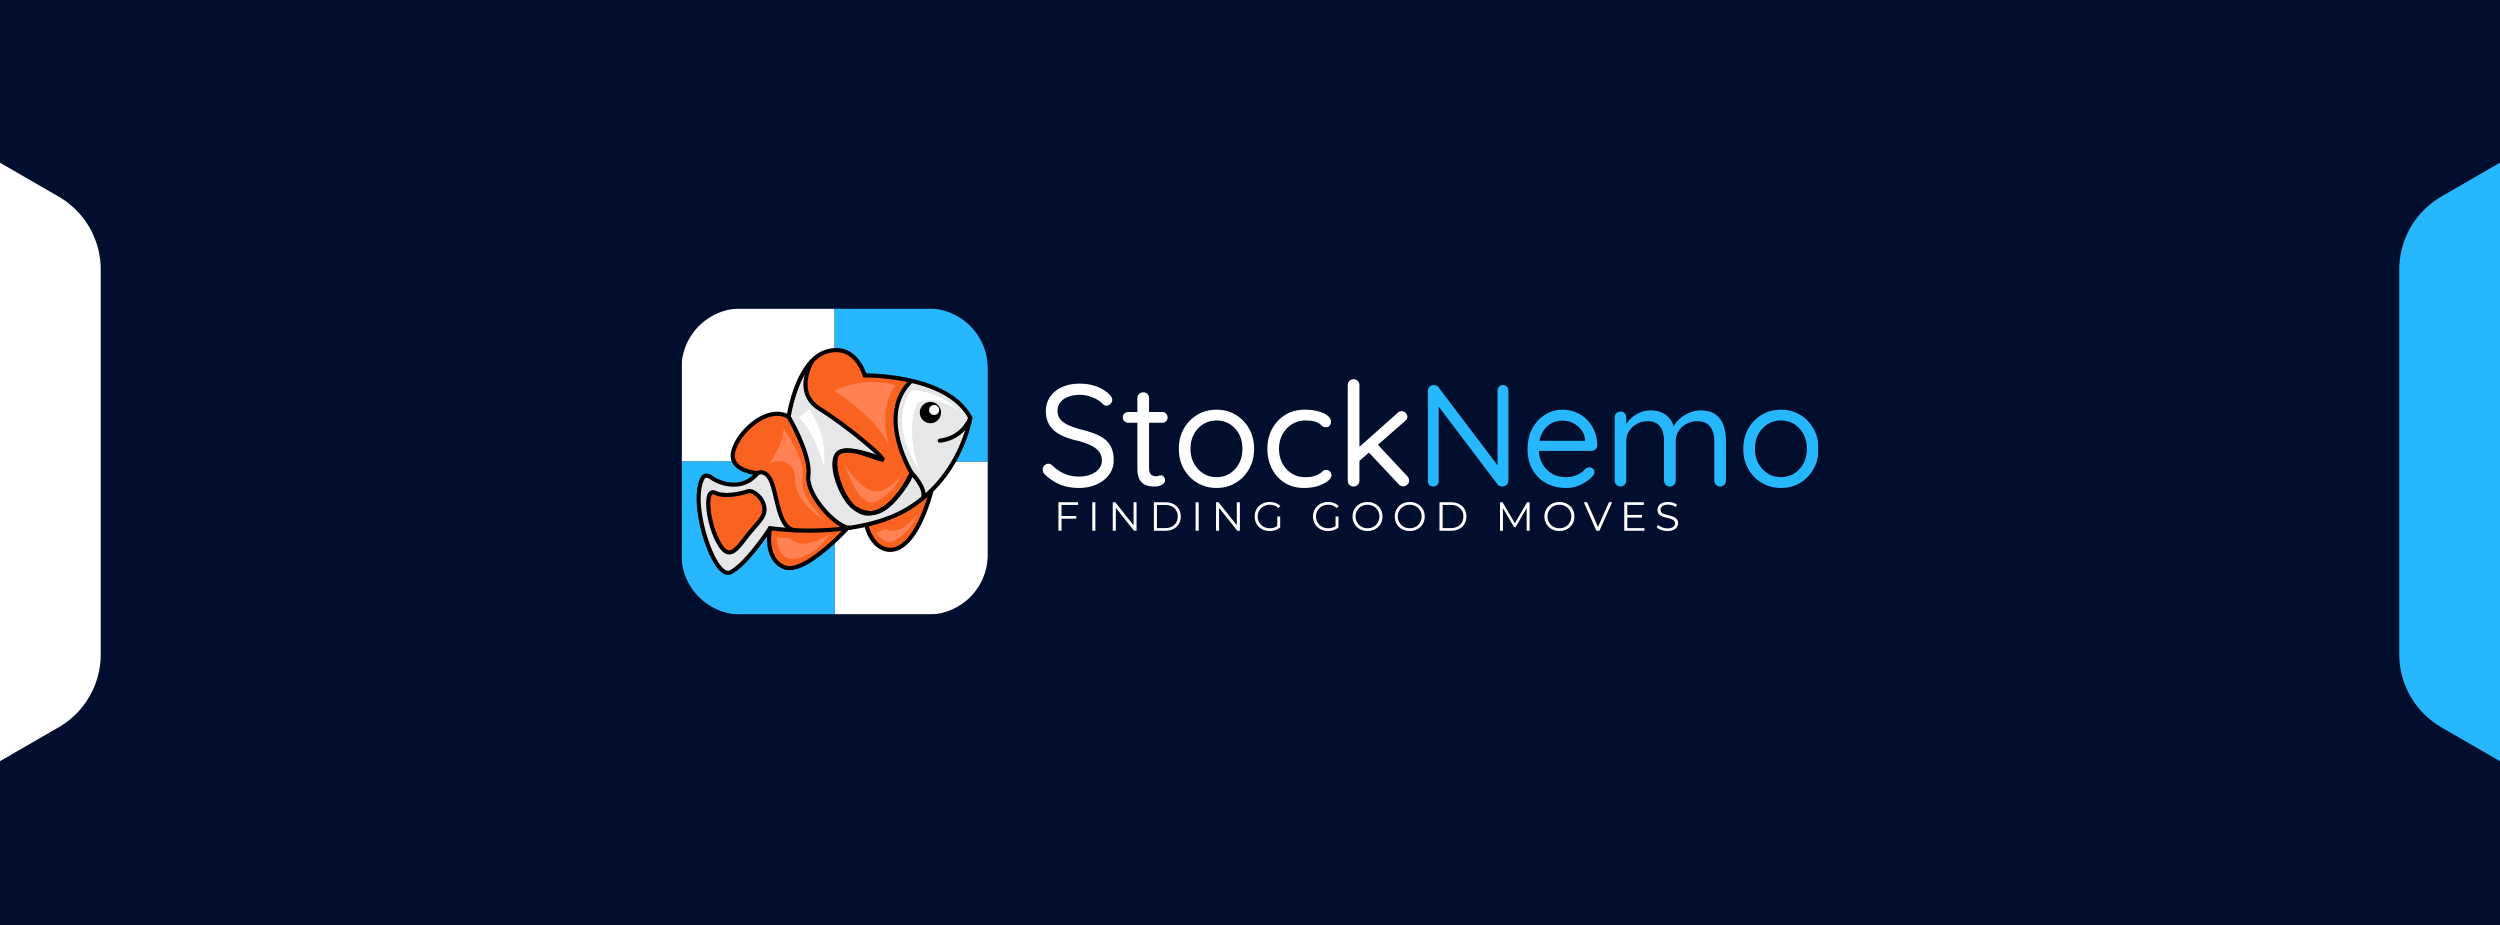 StockNemo Banner